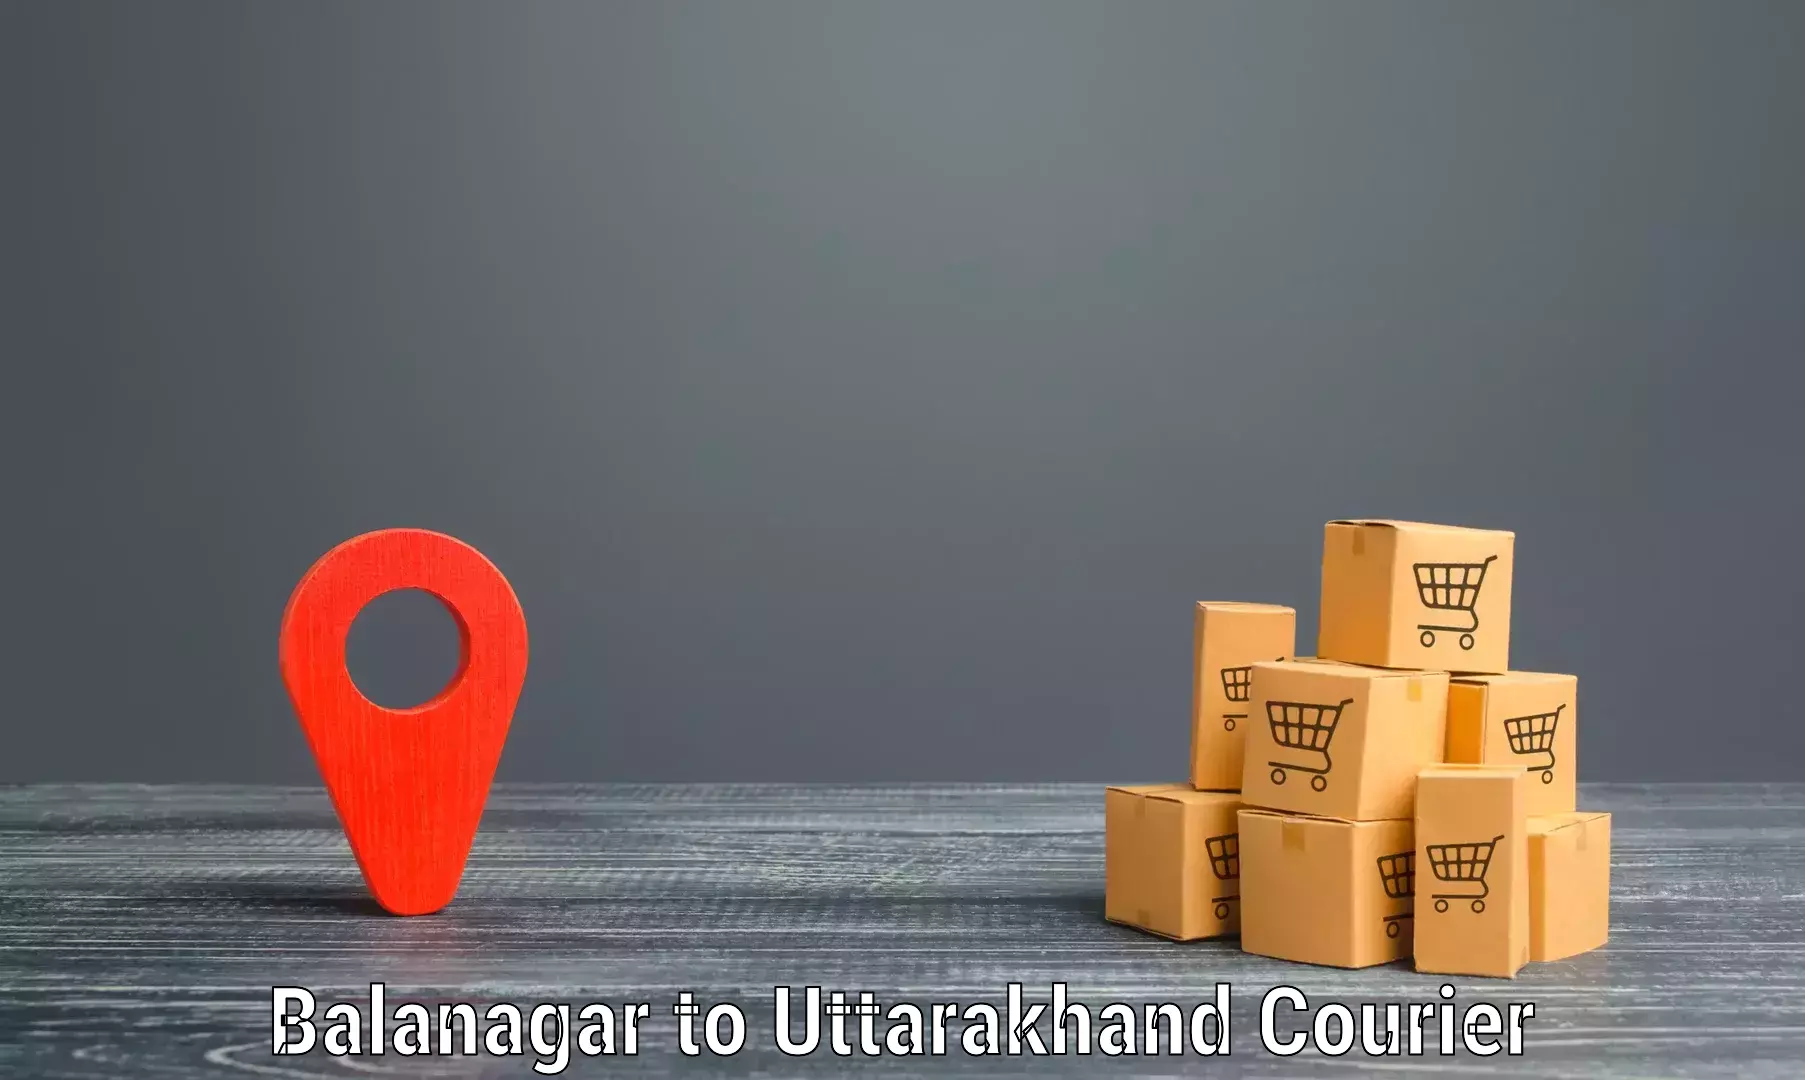 Comprehensive freight services in Balanagar to Someshwar